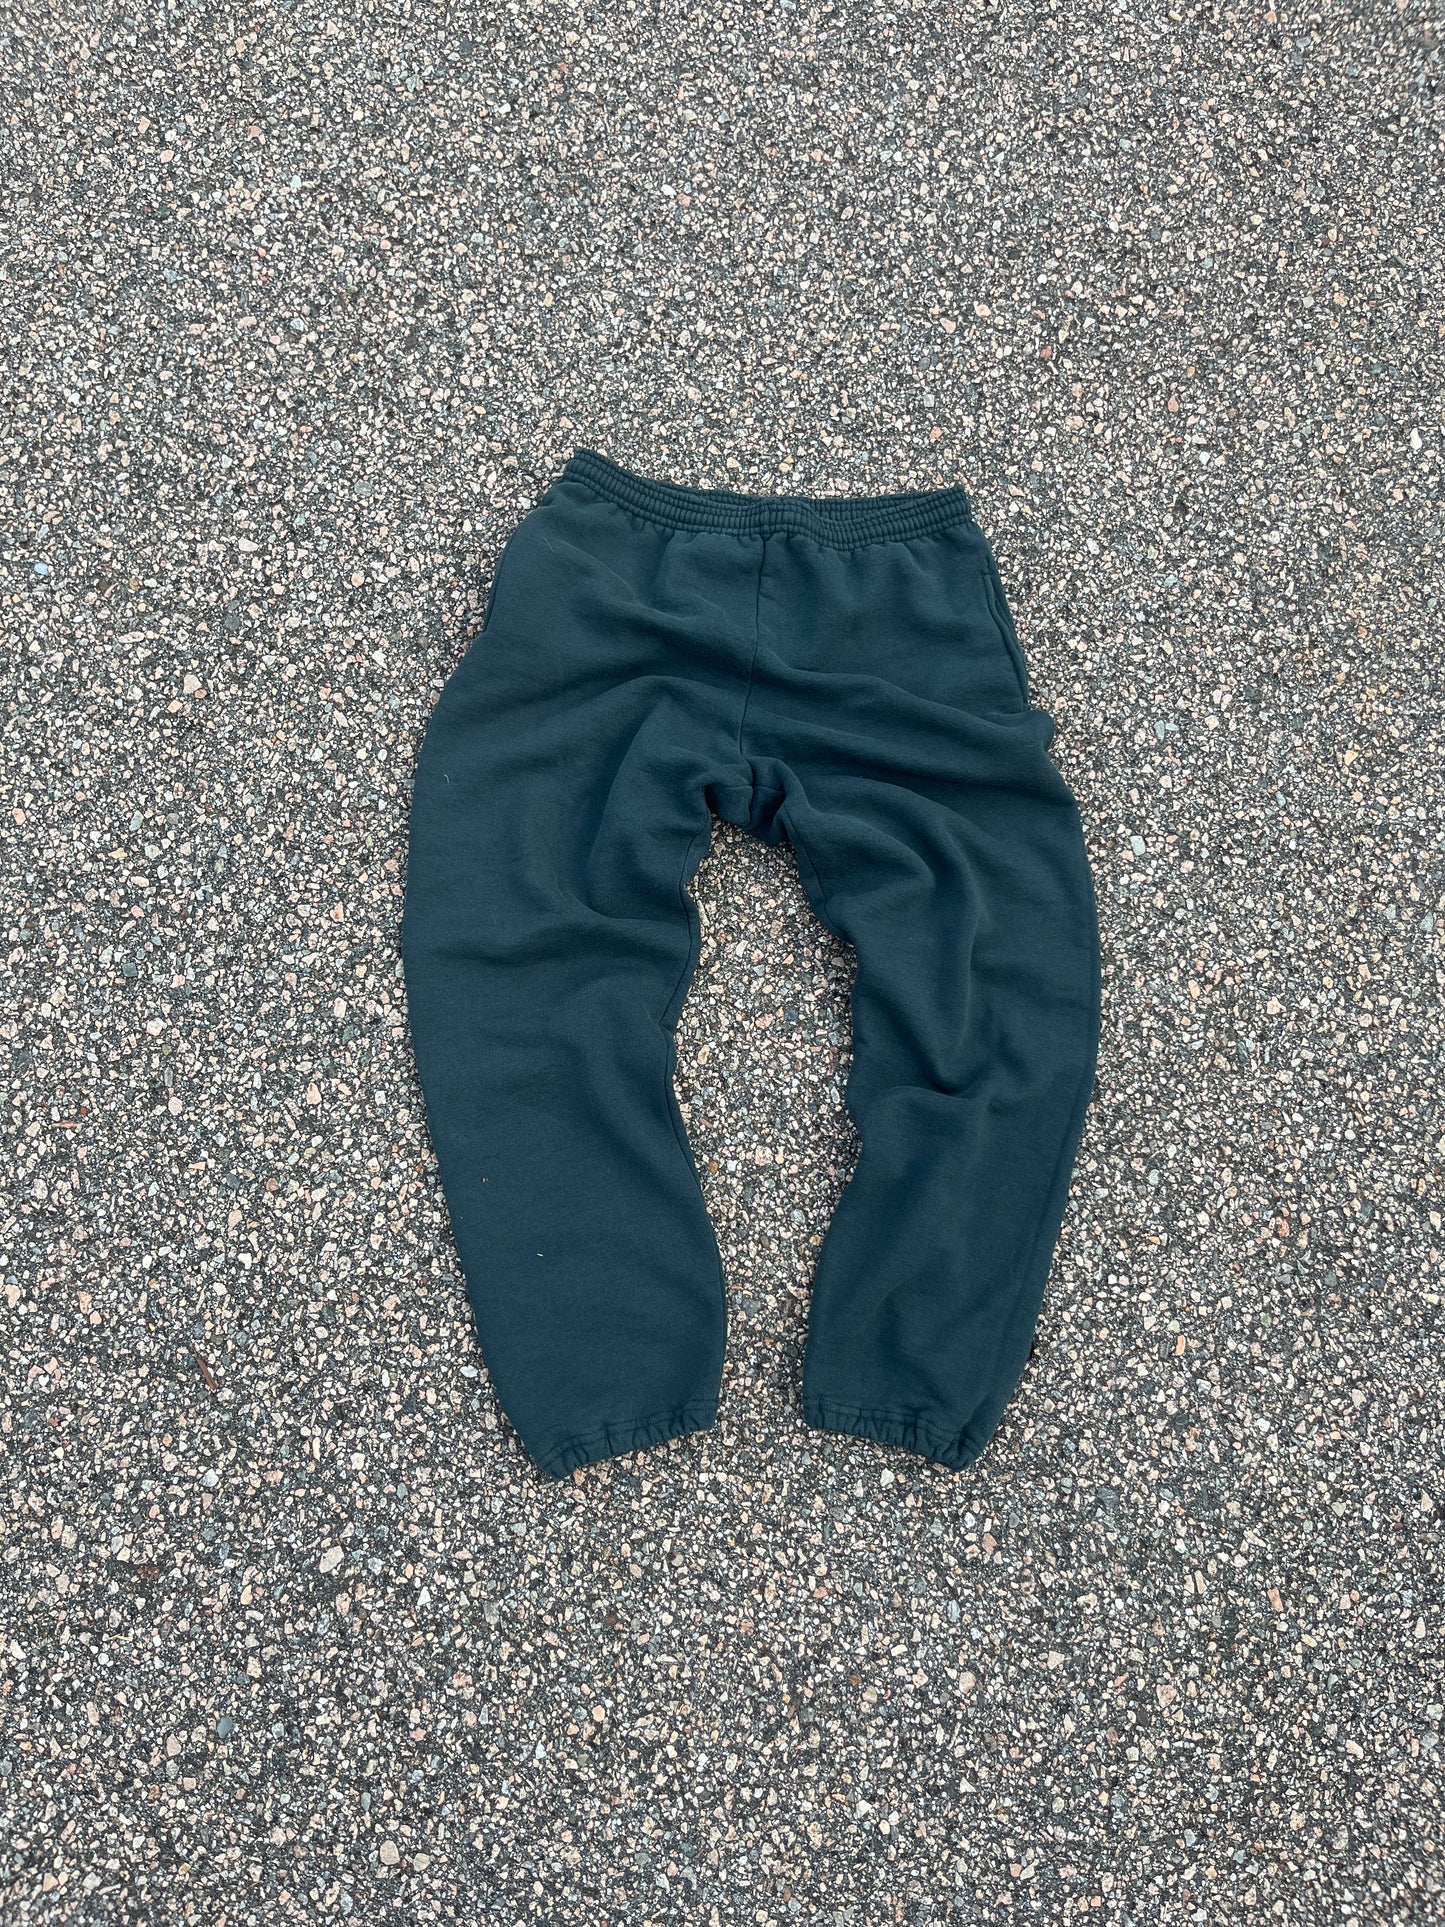 90’s Faded Hunter Green Russell Sweatpants - Medium